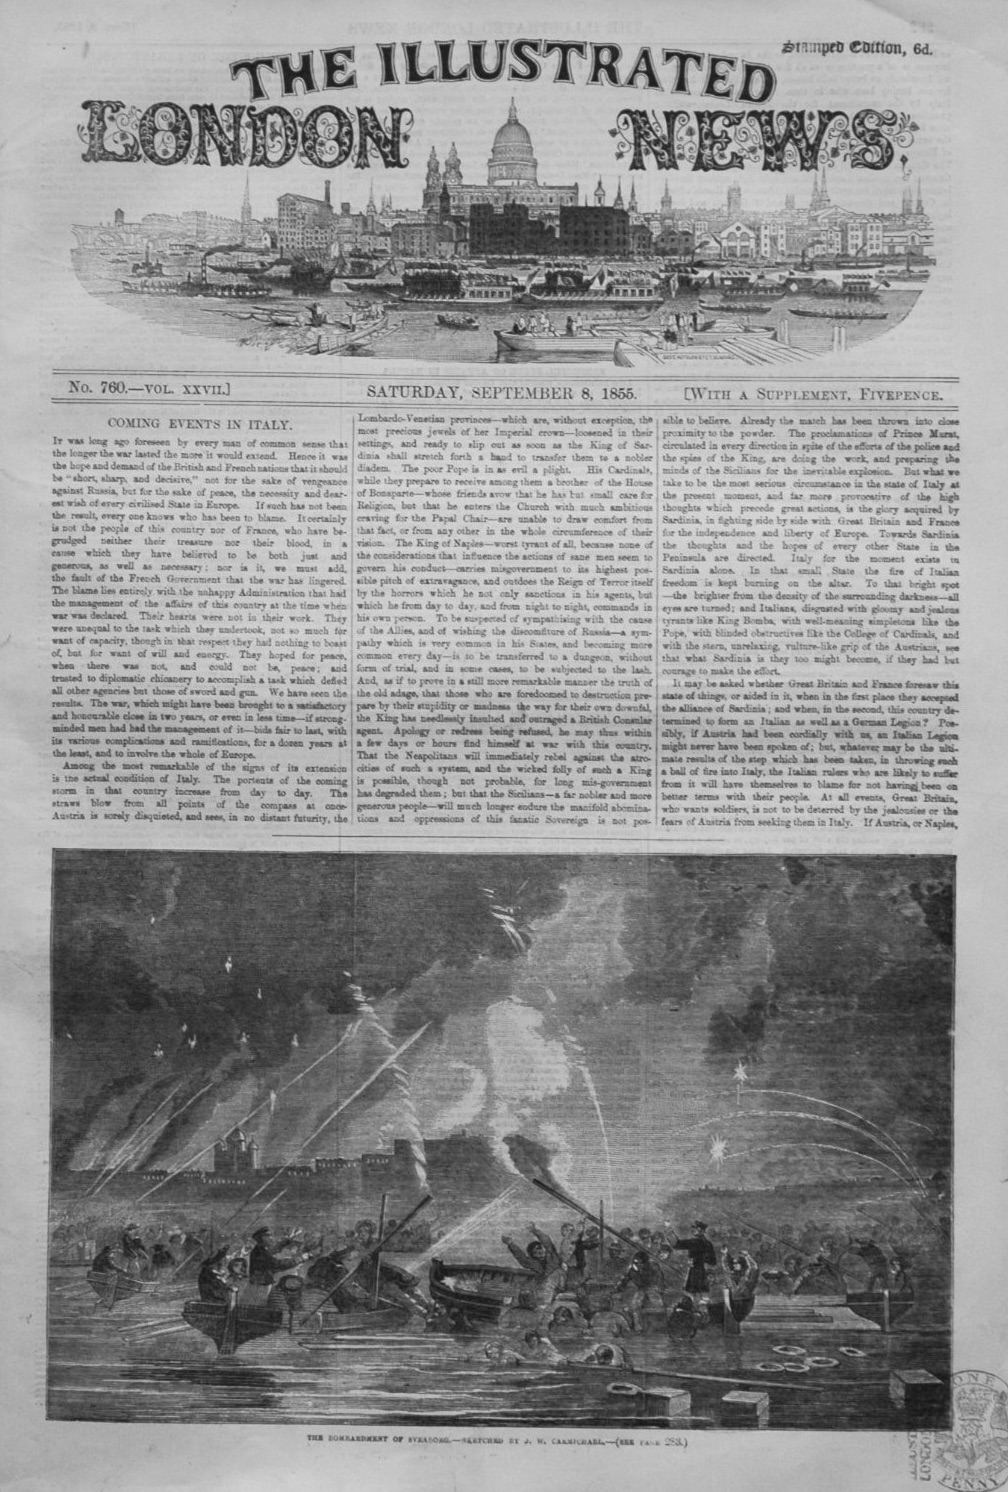 Illustrated London News September 8th. 1855.